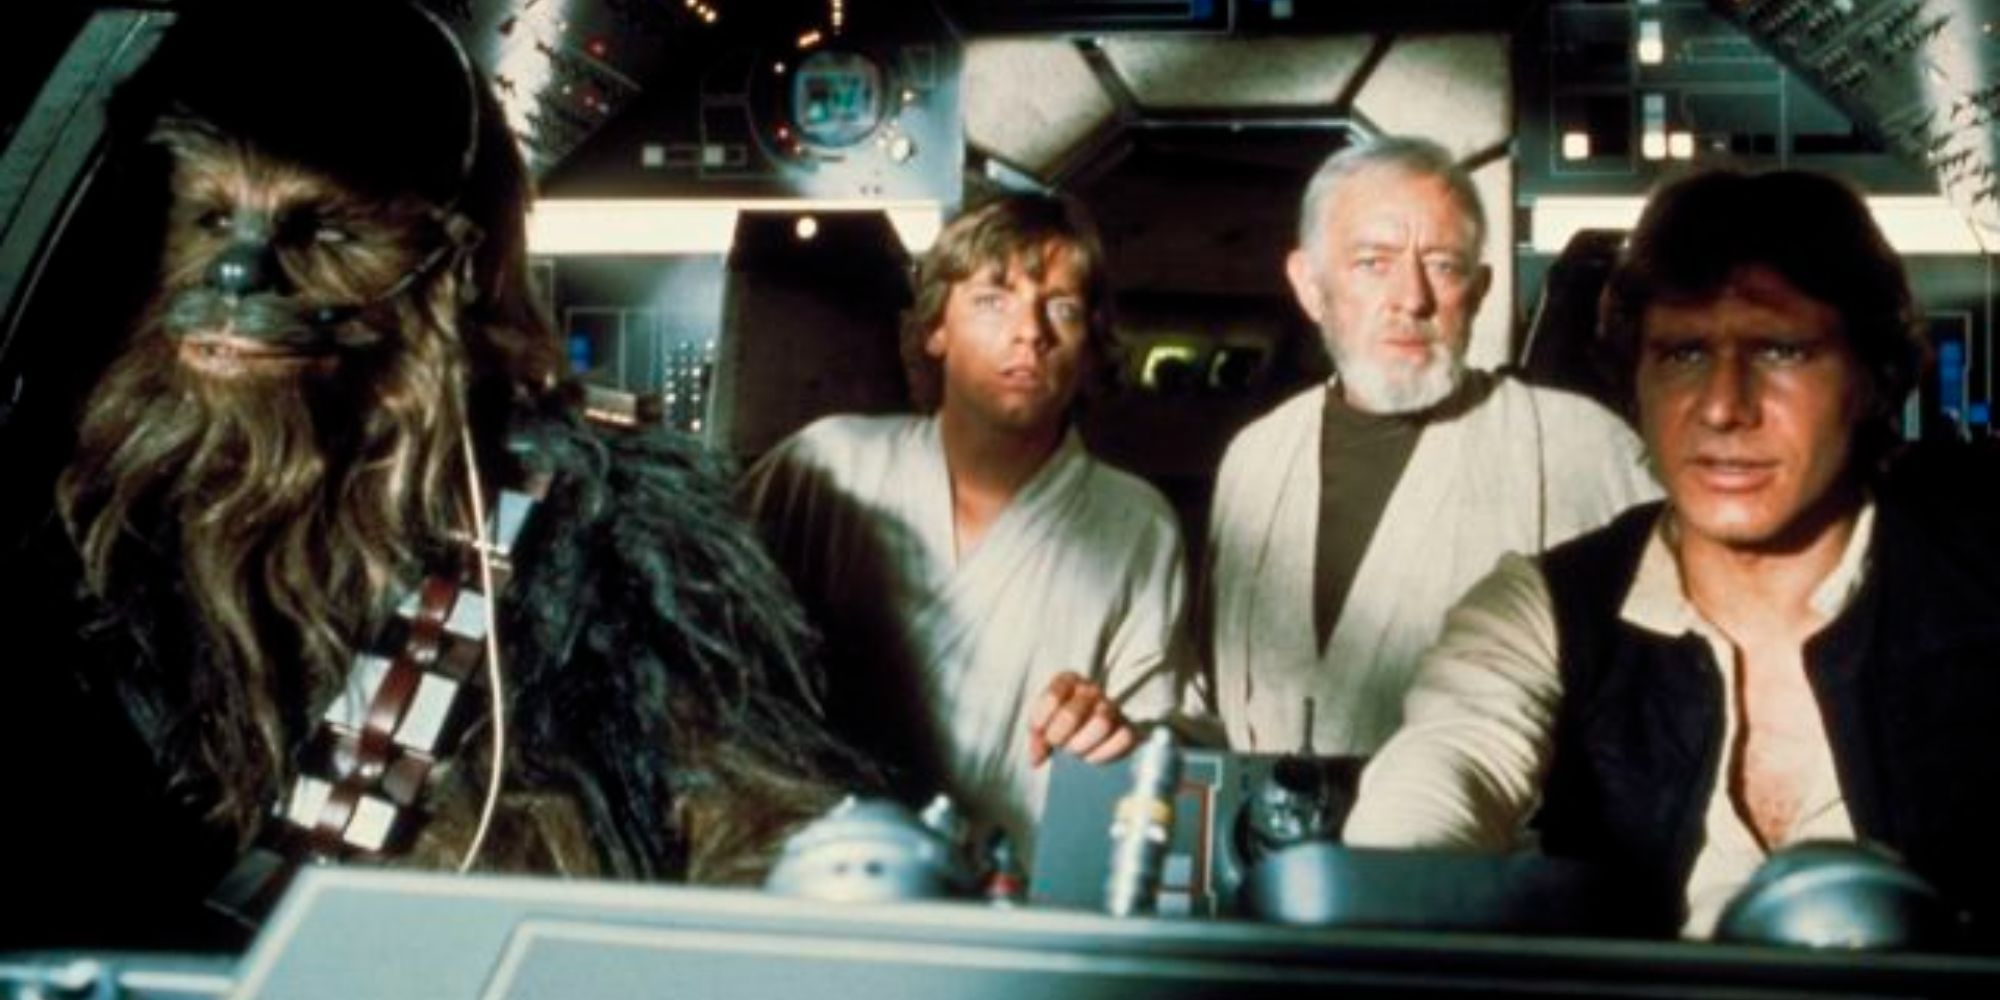 Chewbacca, Luke Skywalker, Obi-Wan Kenobi, and Han Solo in Star Wars Episode IV: A New Hope